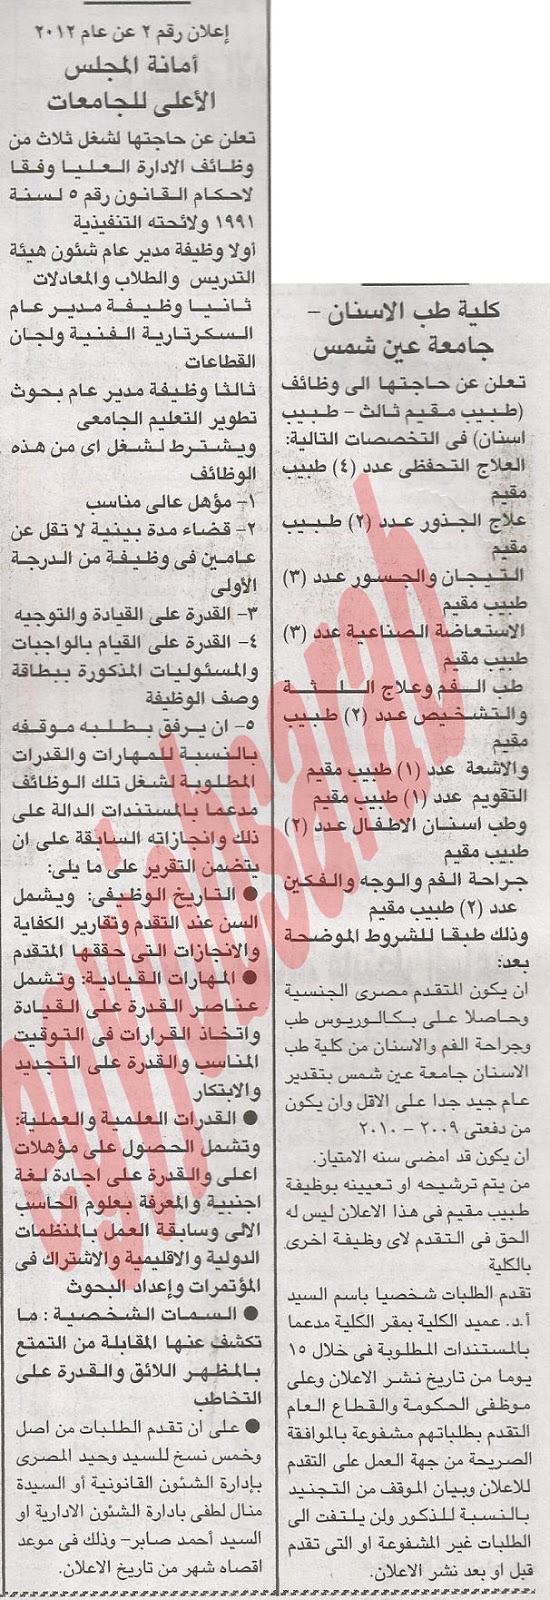 وظائف وفرص عمل جريدة الاخبار الاحد 9 ديسمبر 2012 - وظائف مصر %D8%A7%D9%84%D8%A7%D8%AE%D8%A8%D8%A7%D8%B1+3